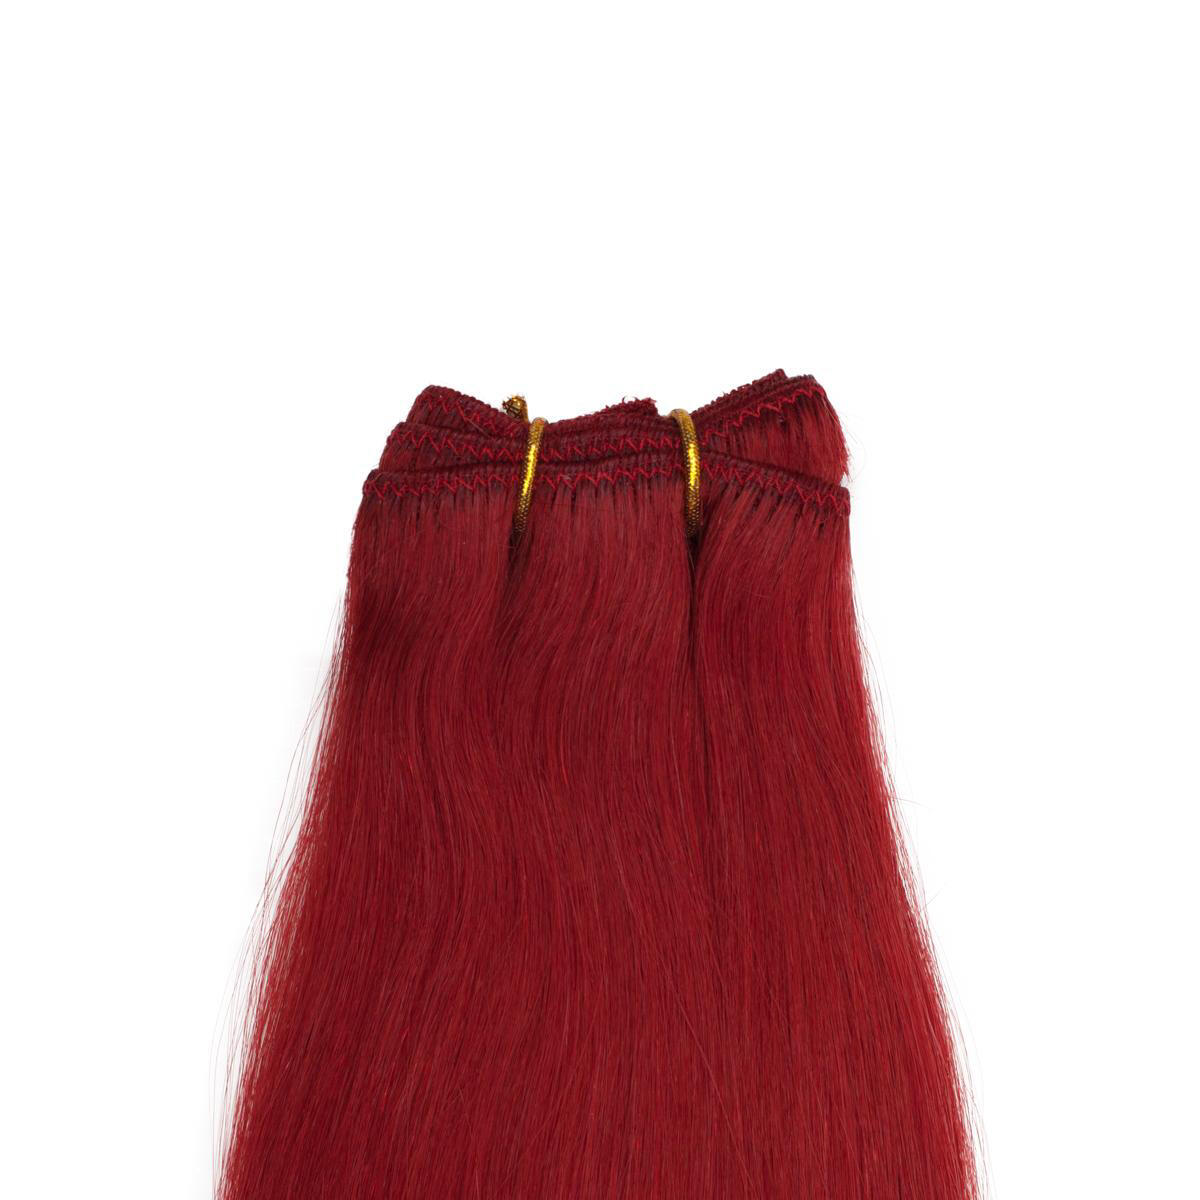 Hair Weft Original 6.0 Red Fire 50 cm